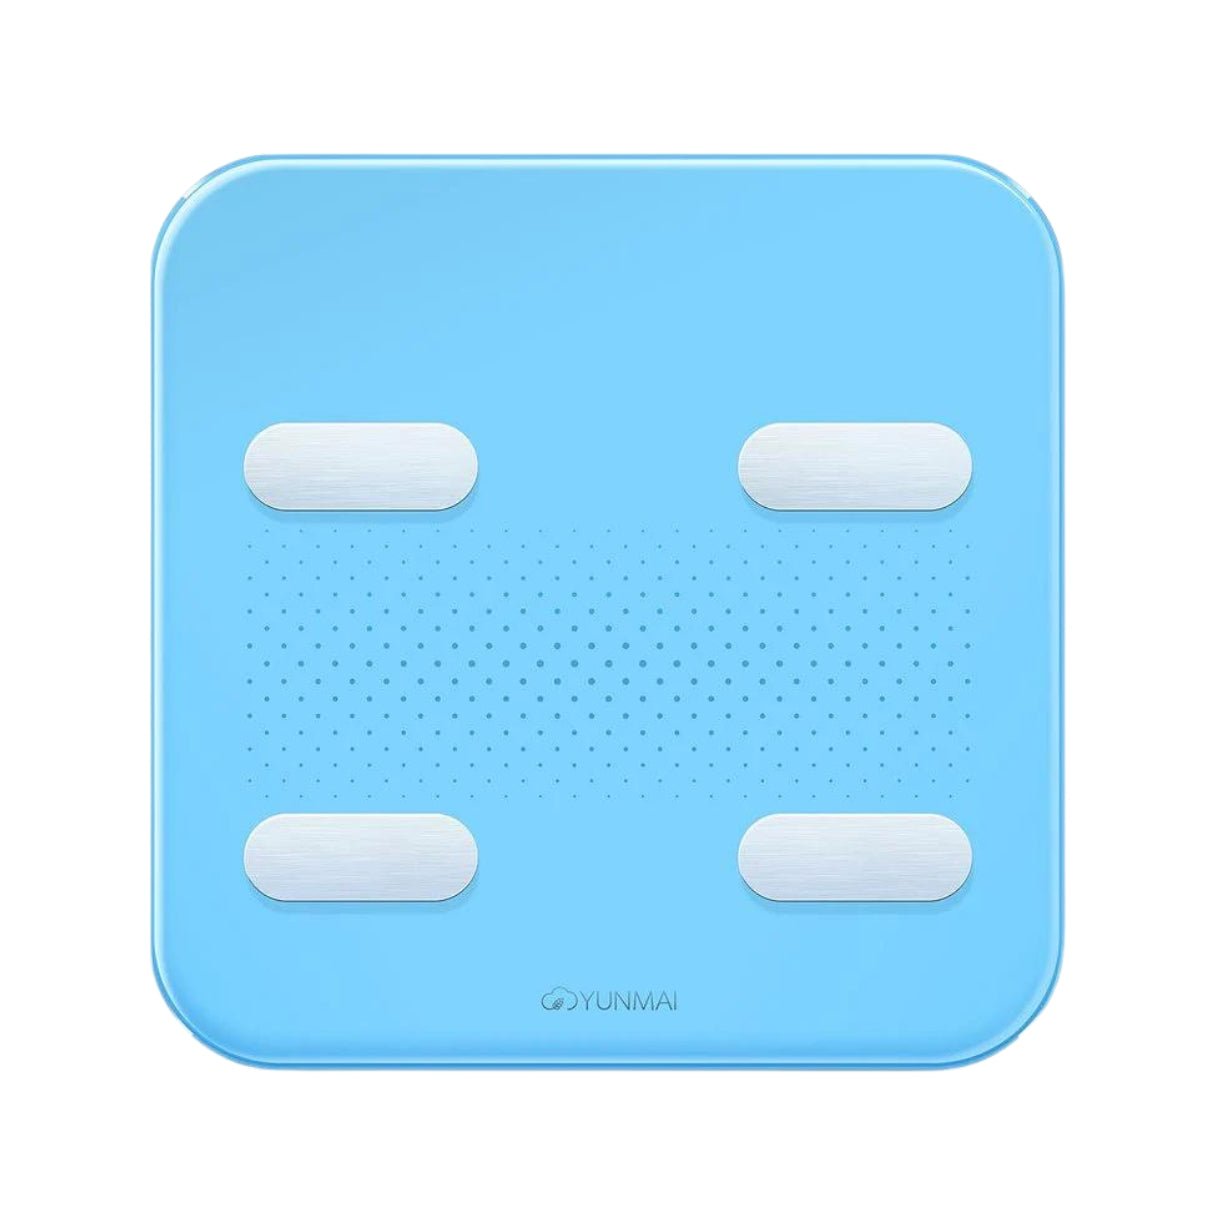 Yunmai Mini Bluetooth Smart Bathroom Scale - Blue